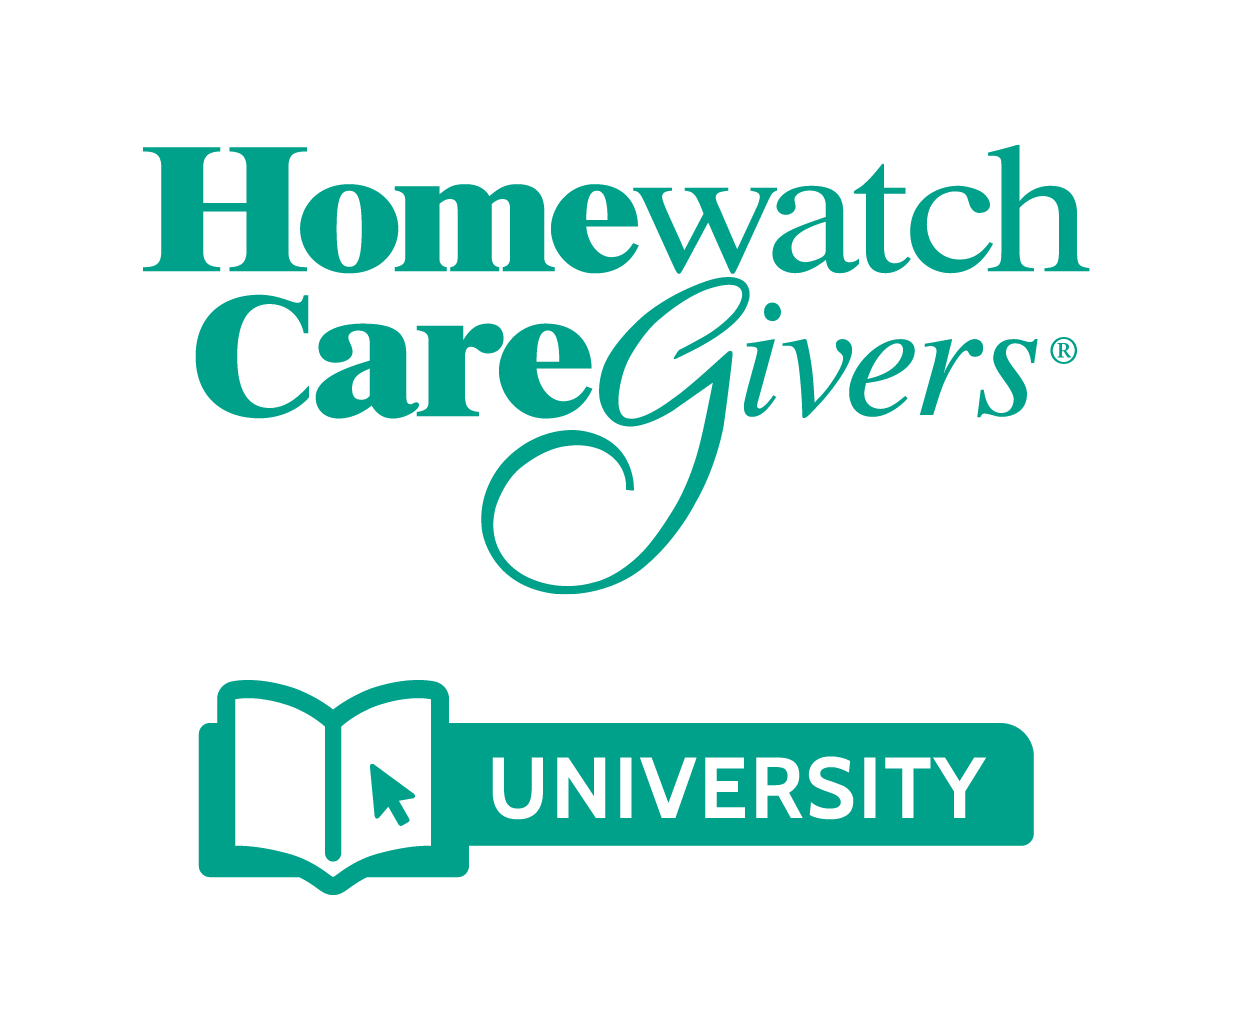 Homewatch CareGivers University